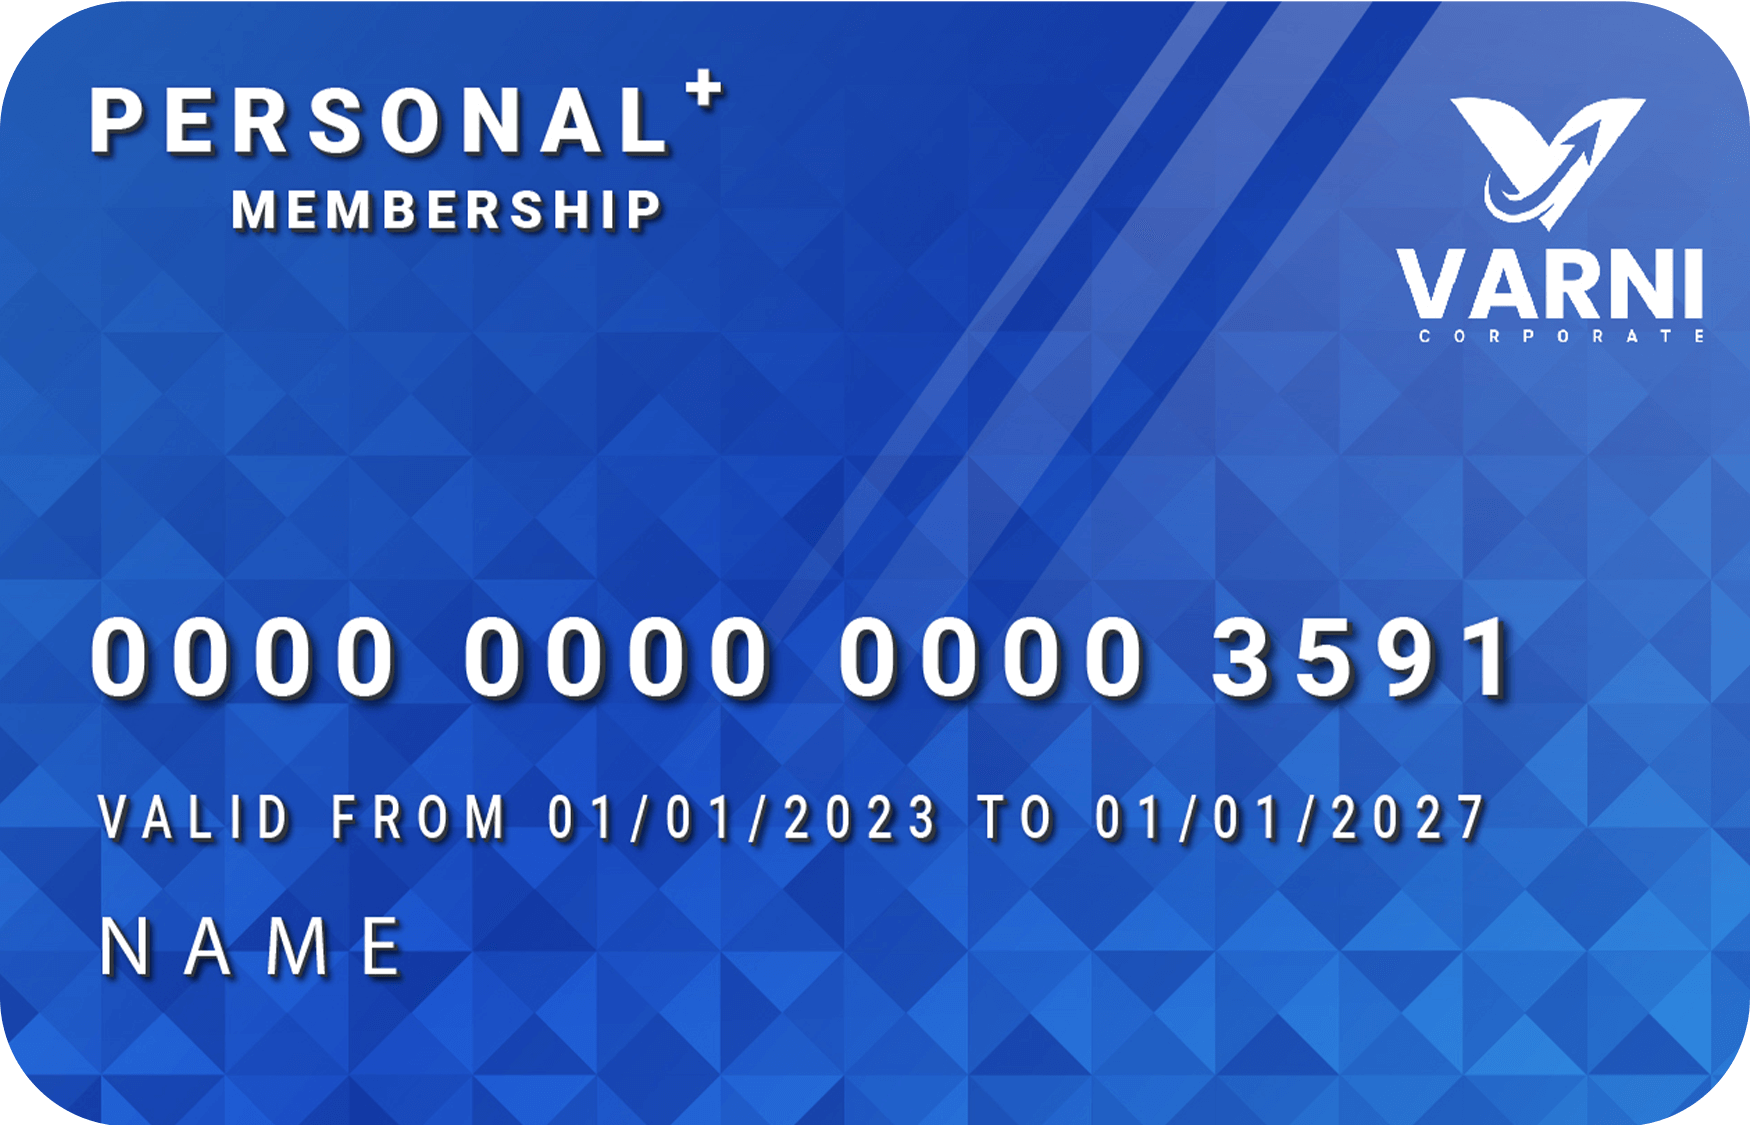 Personal+ membership card